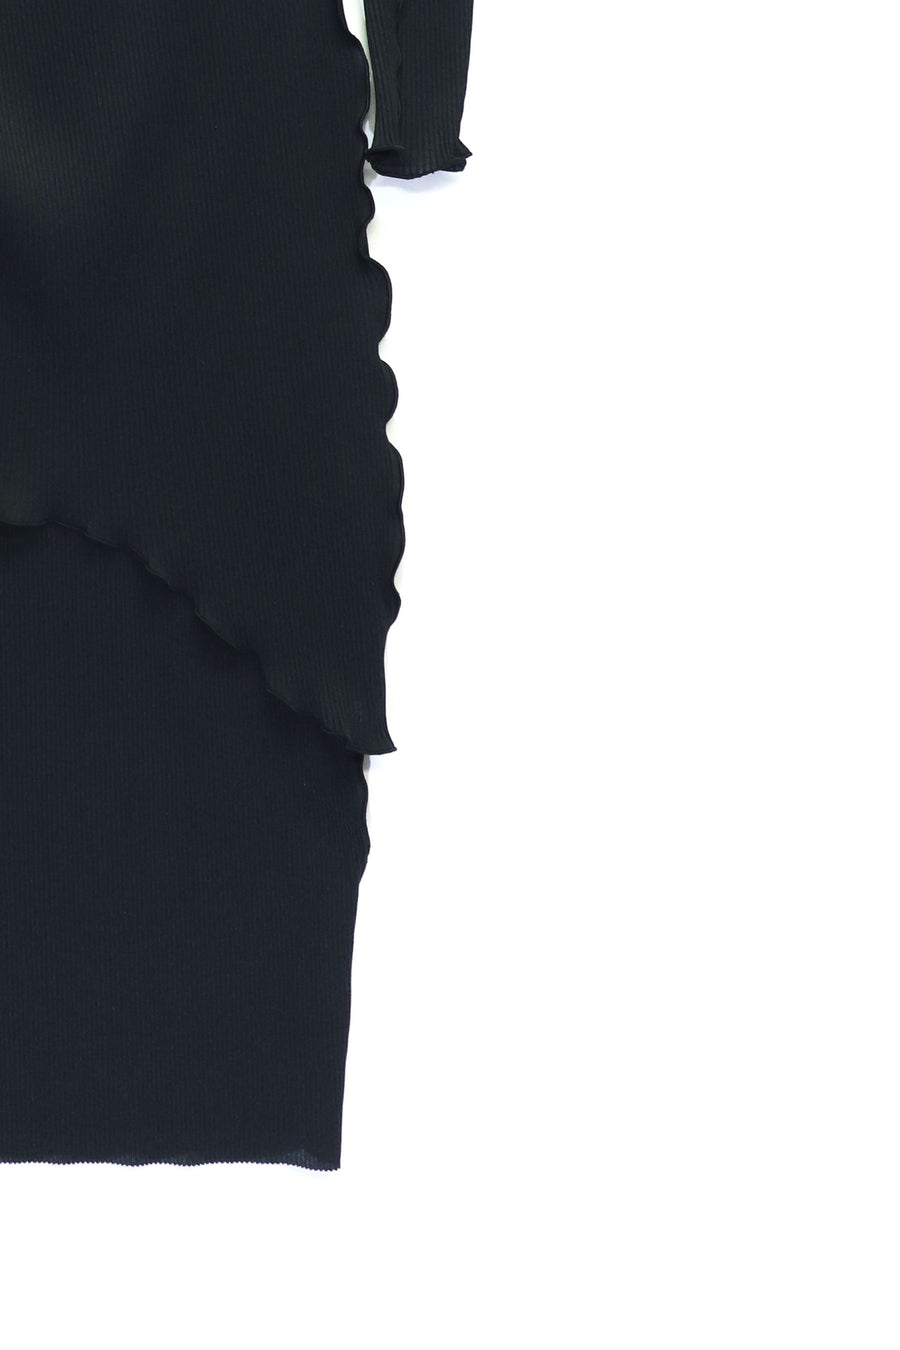 kotohayokozawa  Long sleeve dress high neck type(BLACK)